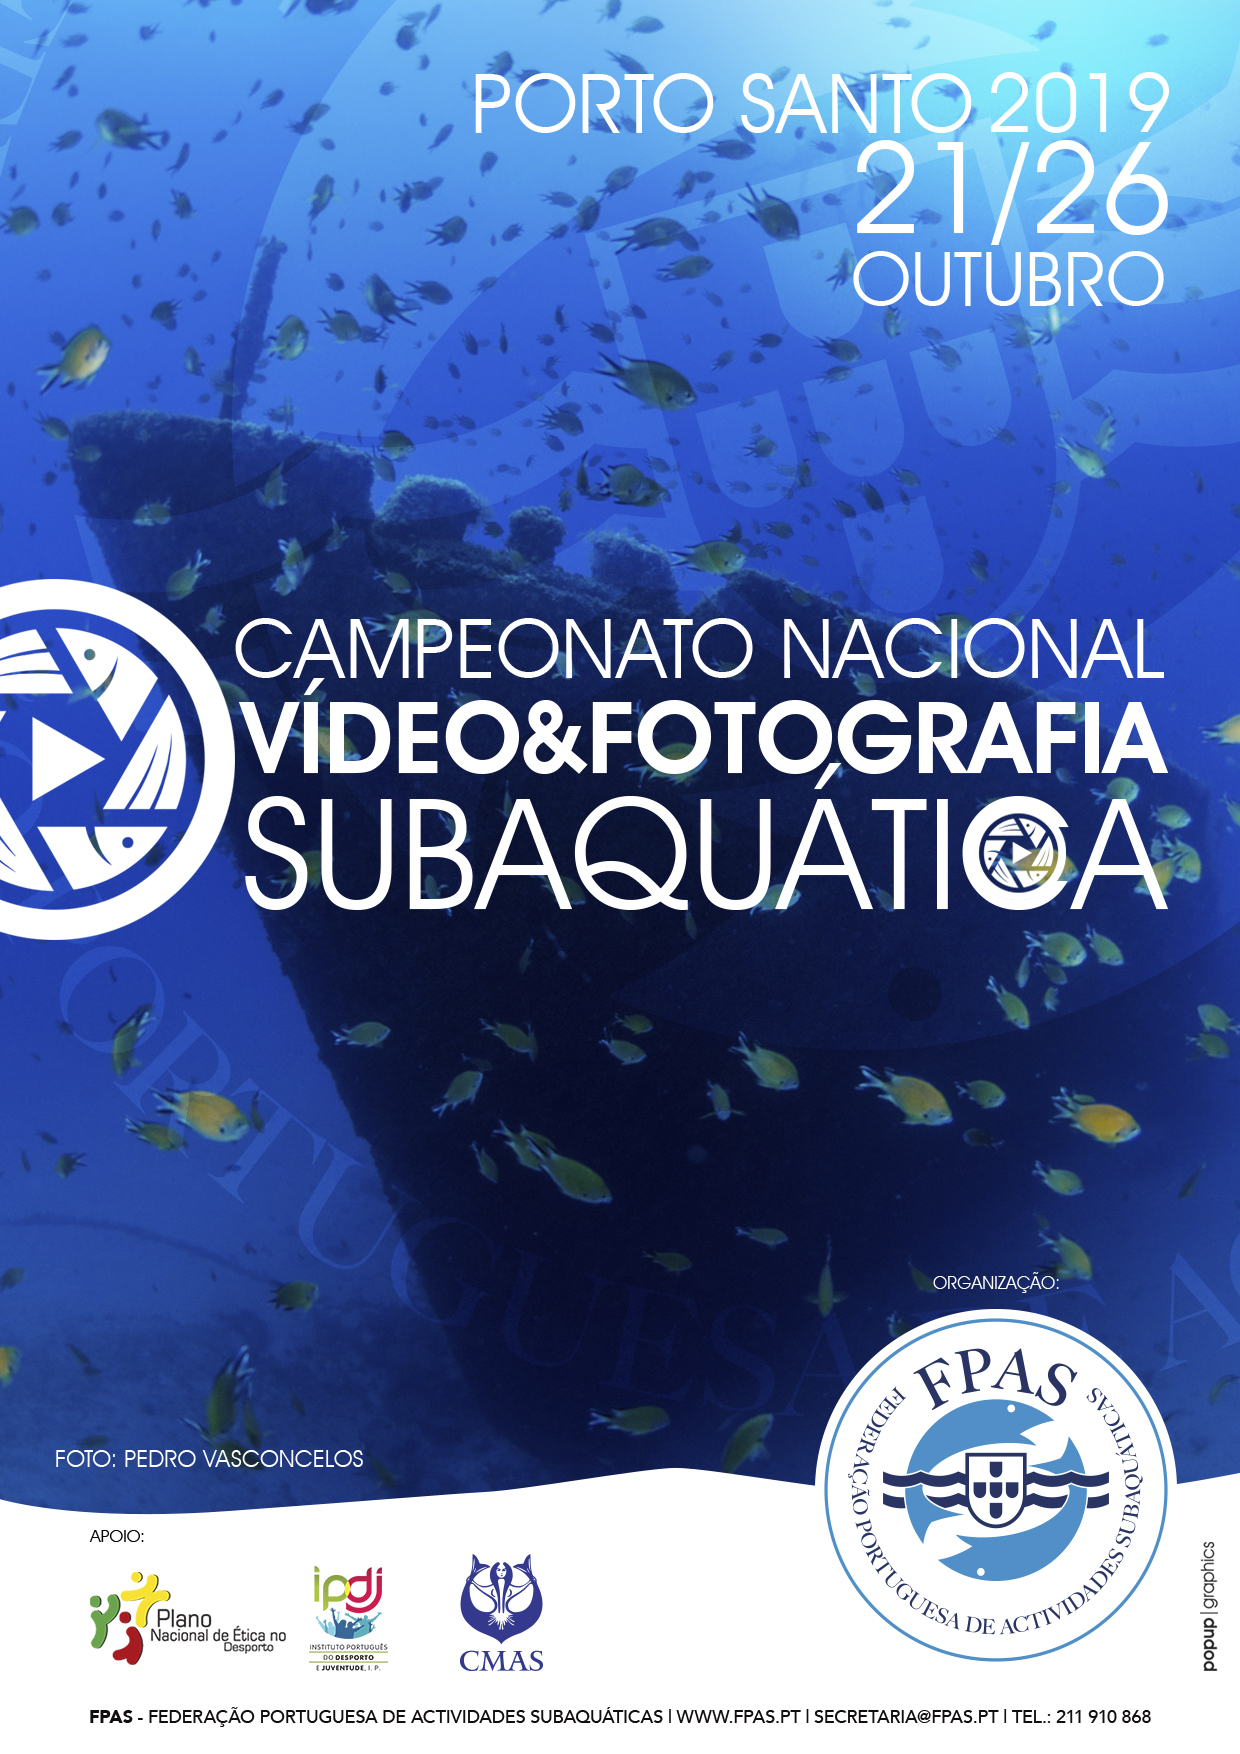 Campeonato Nacional de Video Subaquático - Porto Santo 2019